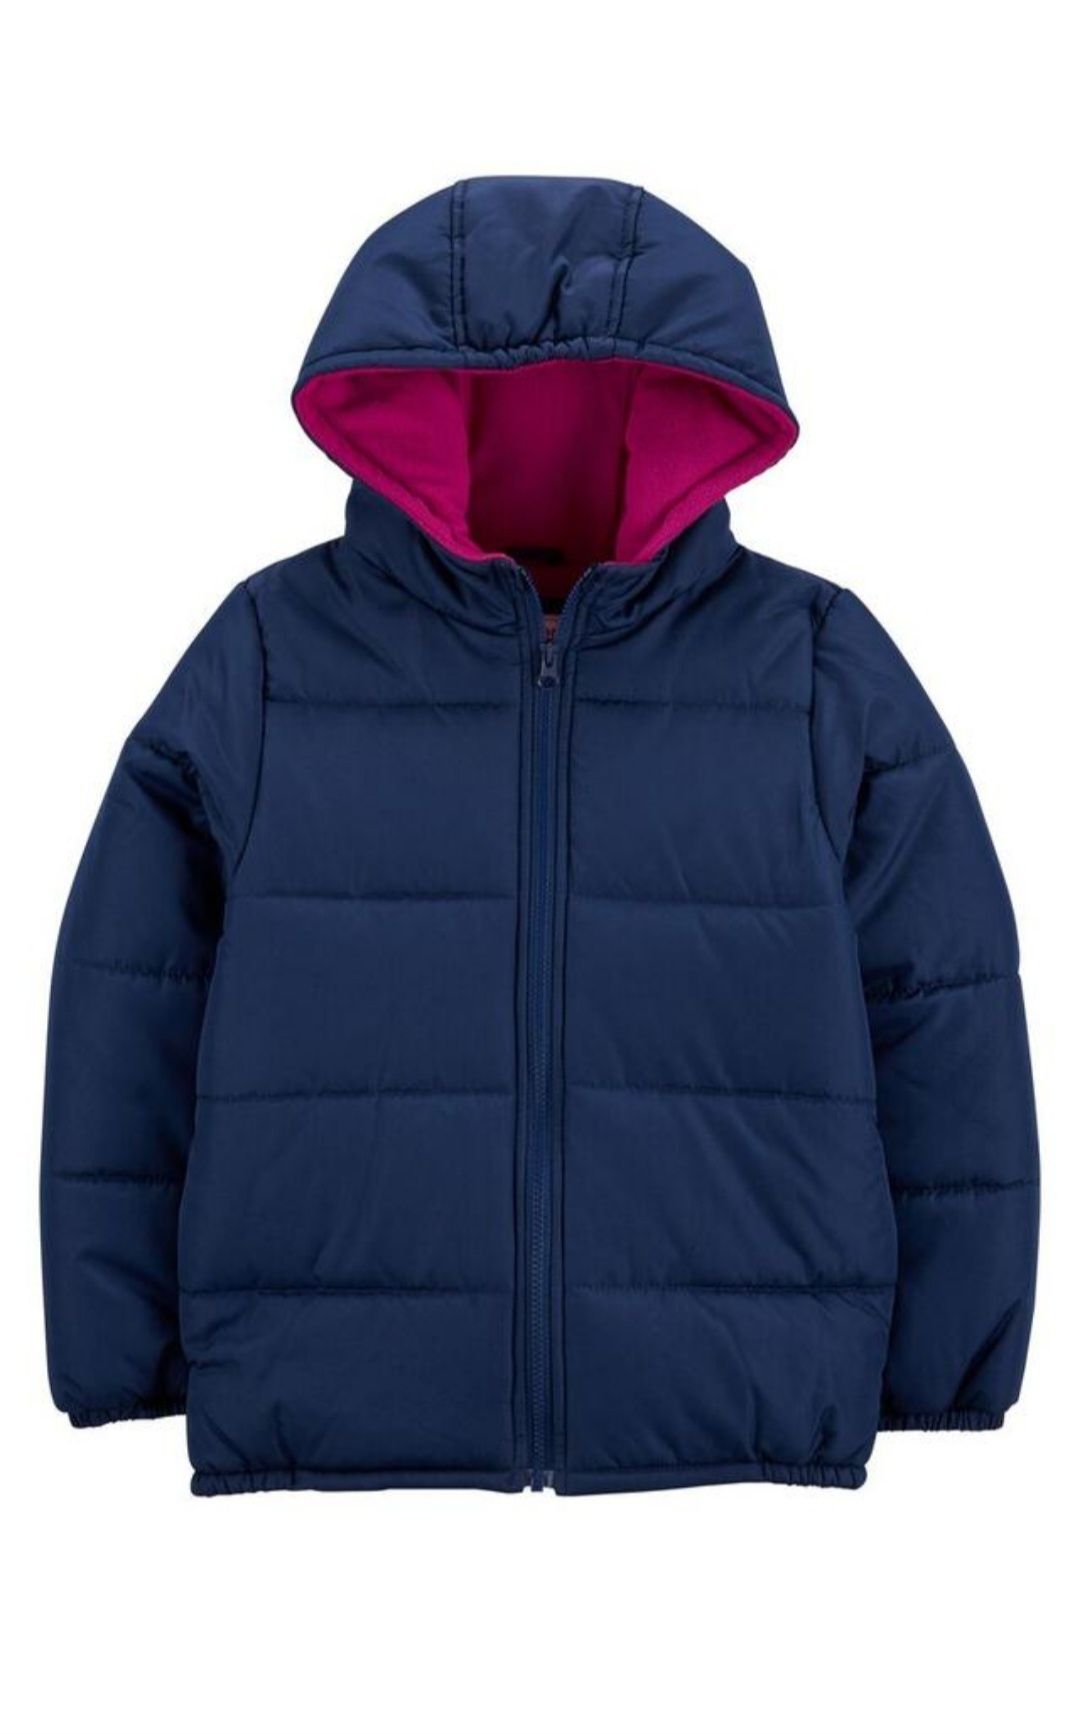 Дитяча курточка утеплена єврозима, розмір 4Т, carter's